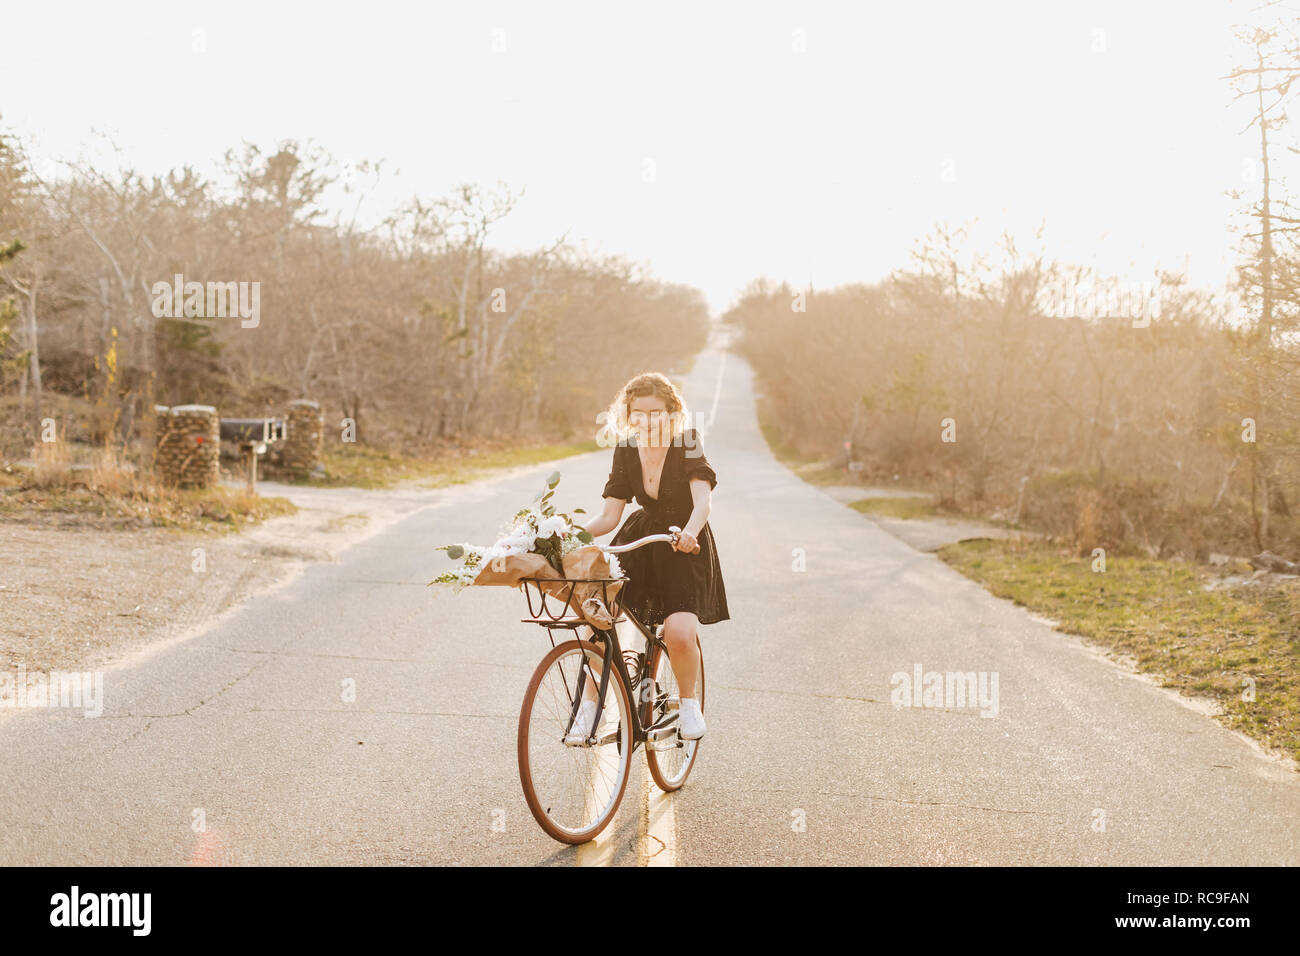 Young woman riding bicycle on rural road, Menemsha, Martha's Vineyard, Massachusetts, USA Stock Photo